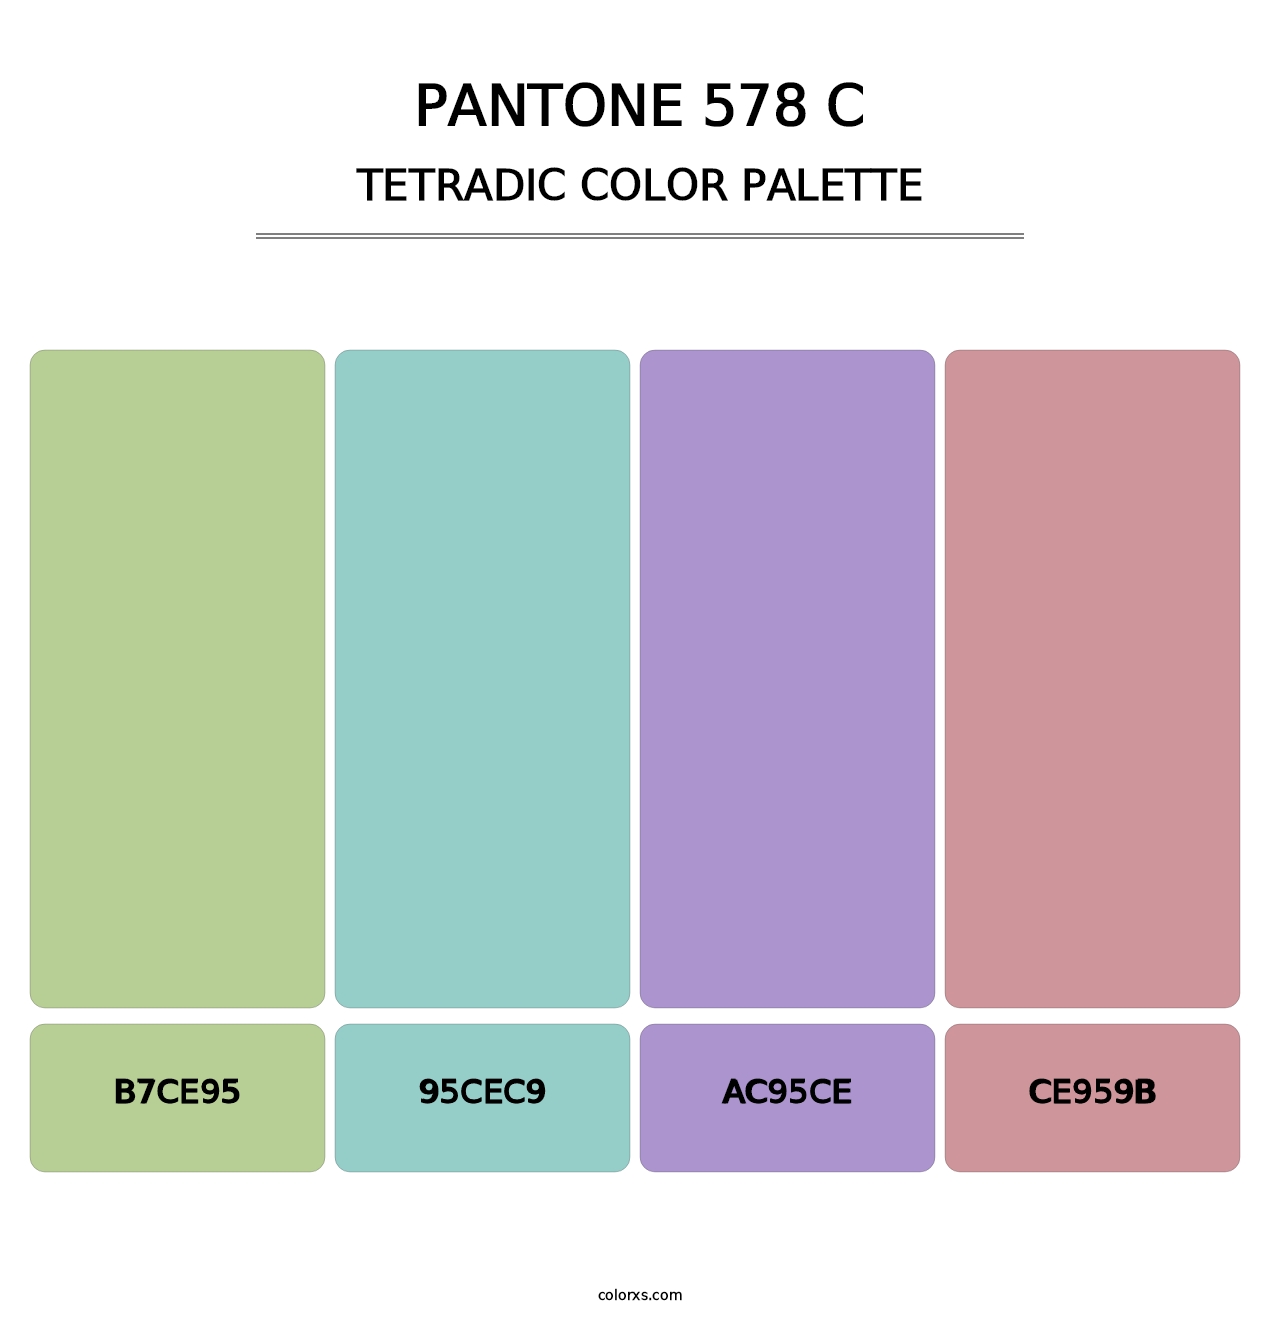 PANTONE 578 C - Tetradic Color Palette